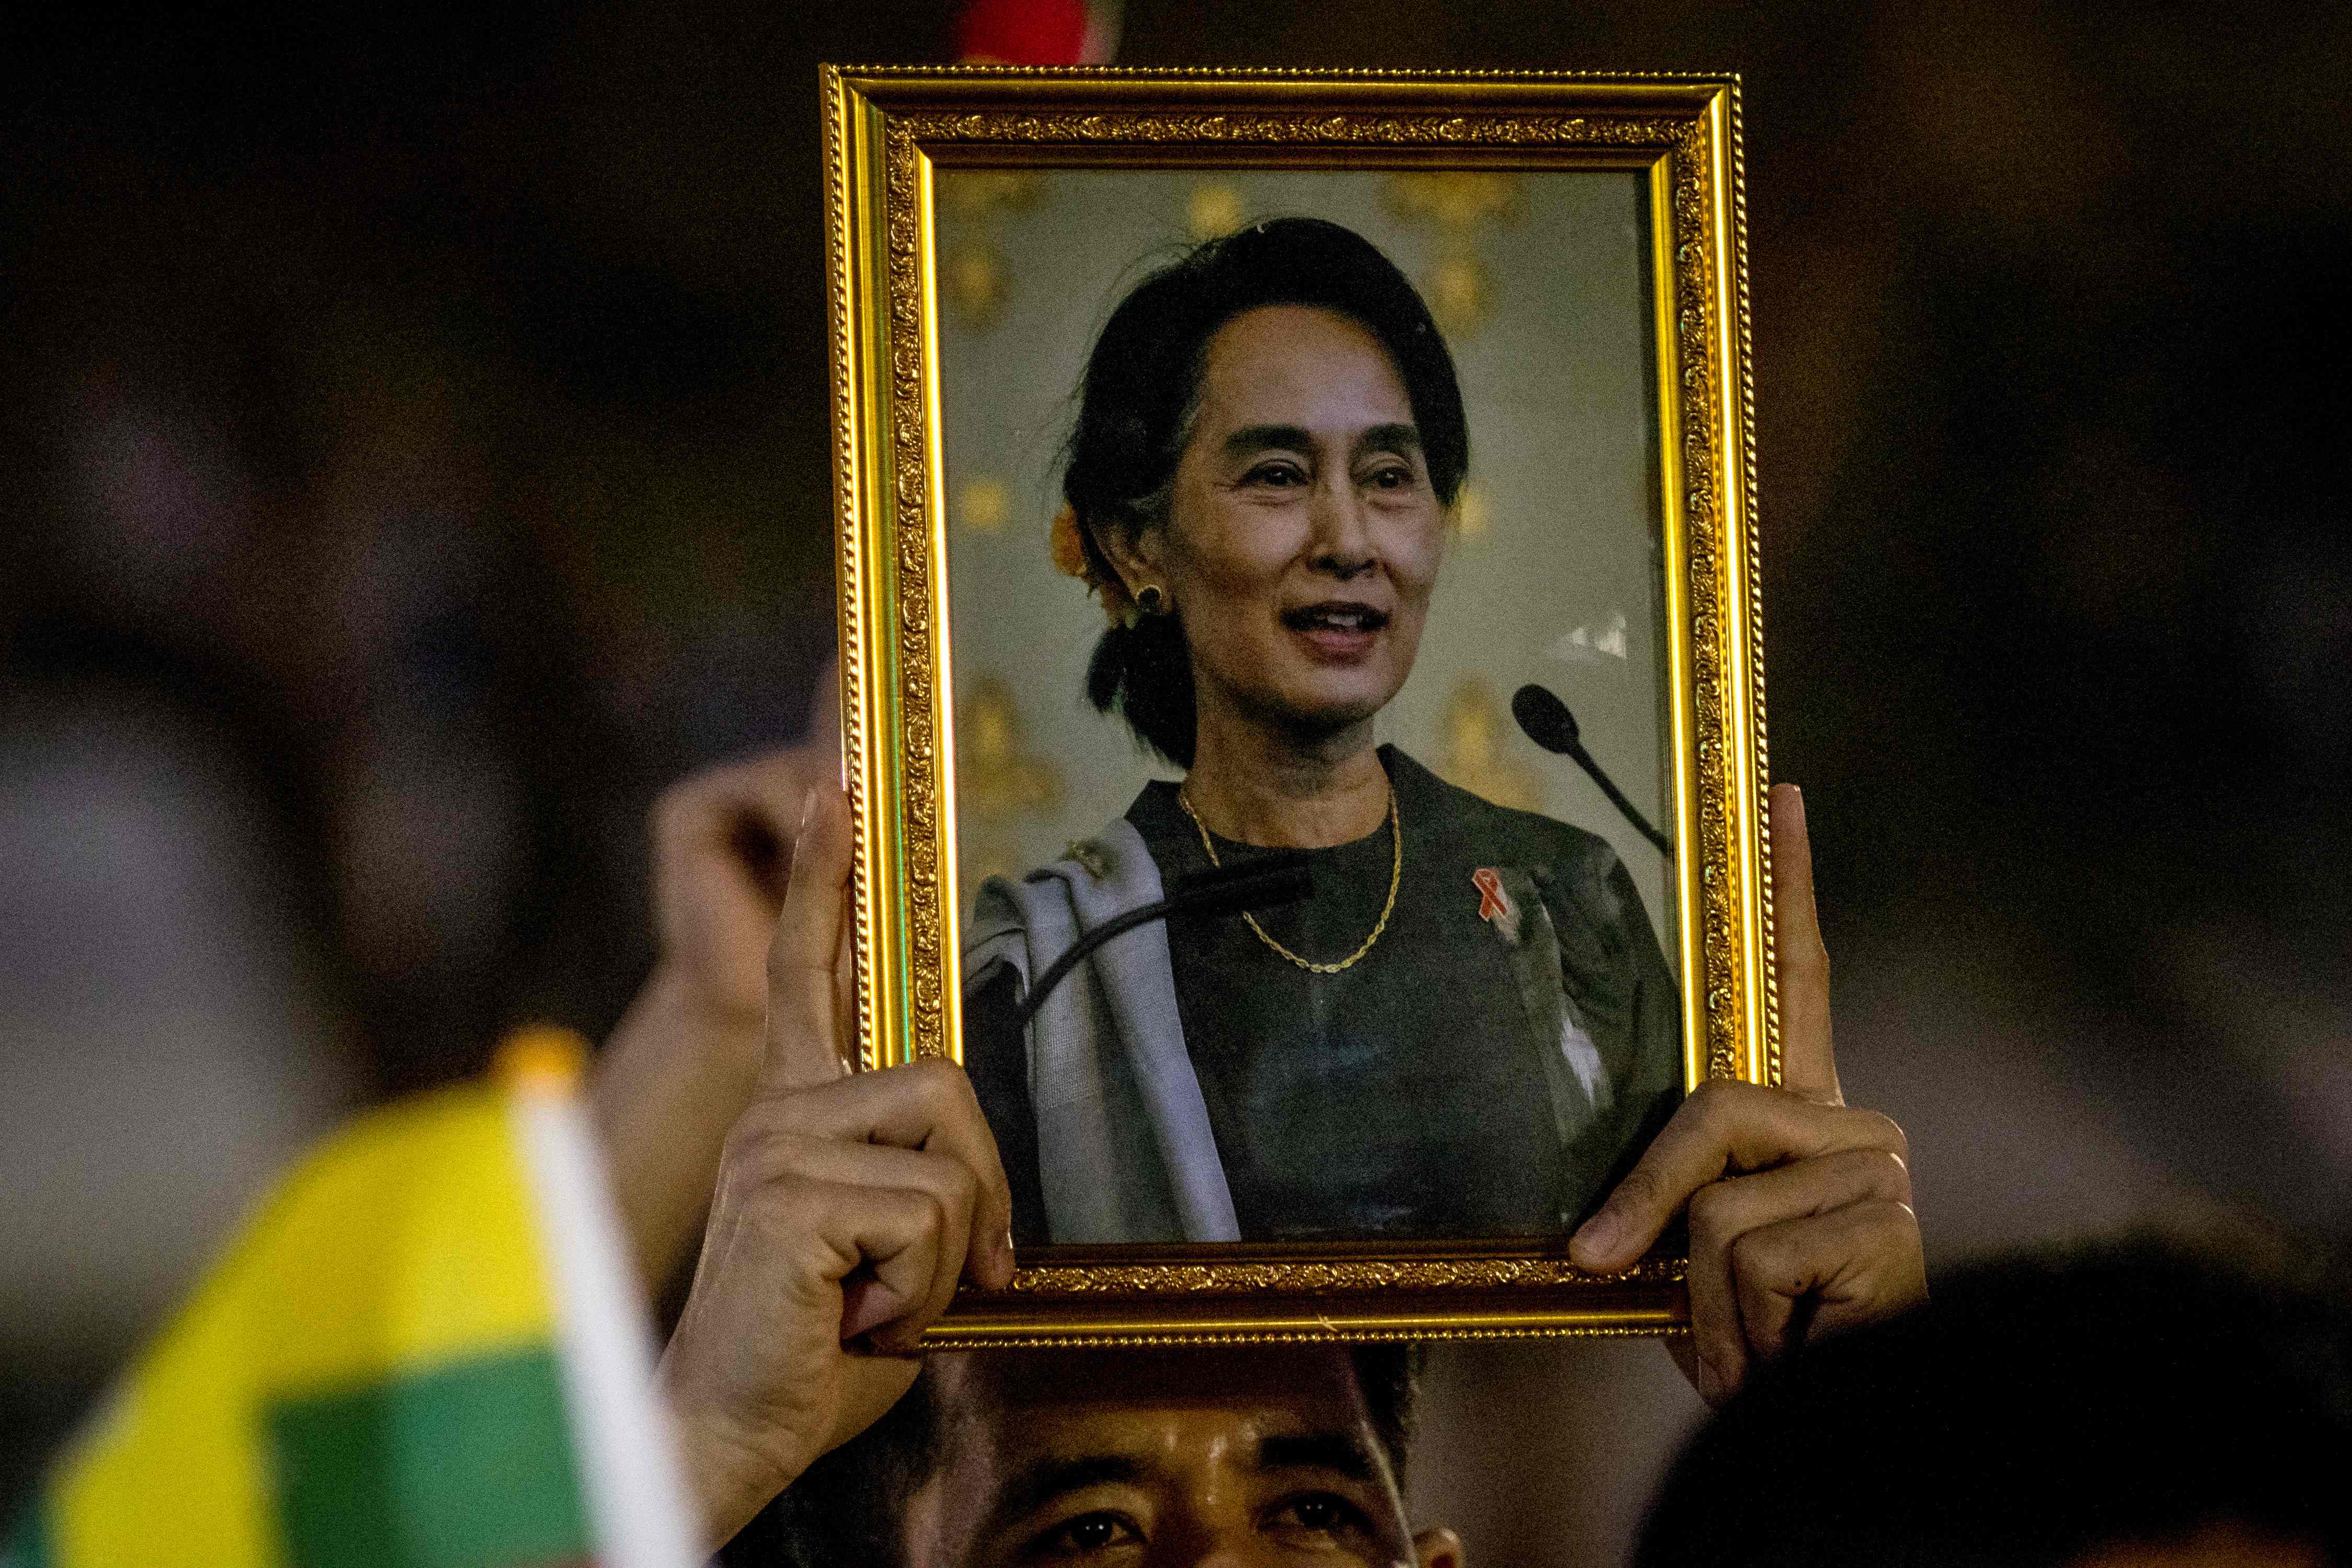 A military spokesman said that the information on Aung San Suu Kyi had been verified